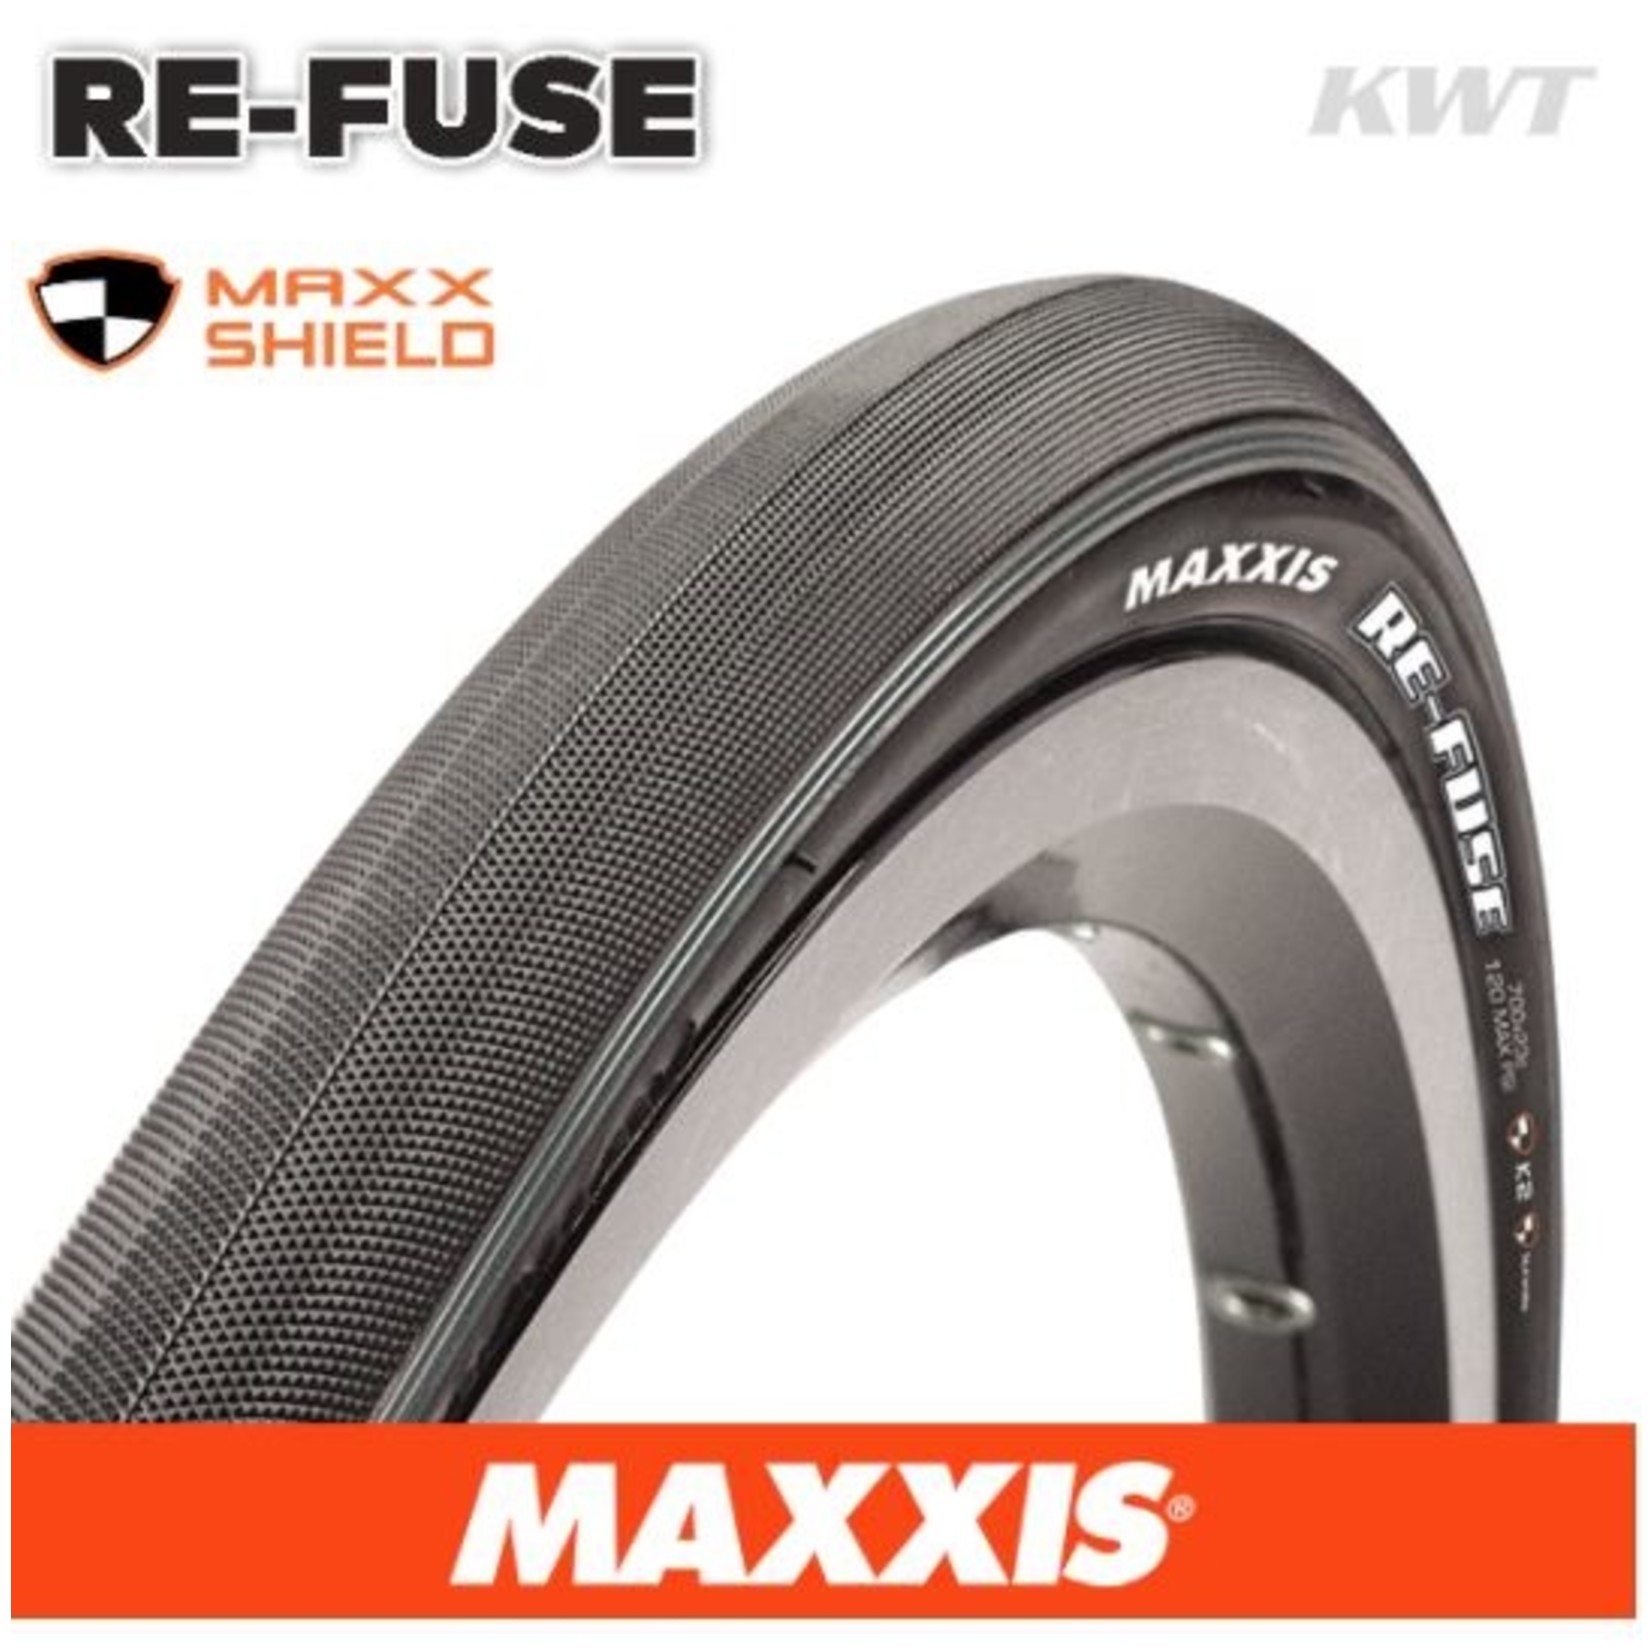 Maxxis Refuse Bike Tyre - 700 X 28 - Folding 60Tpi Maxxshield - Black